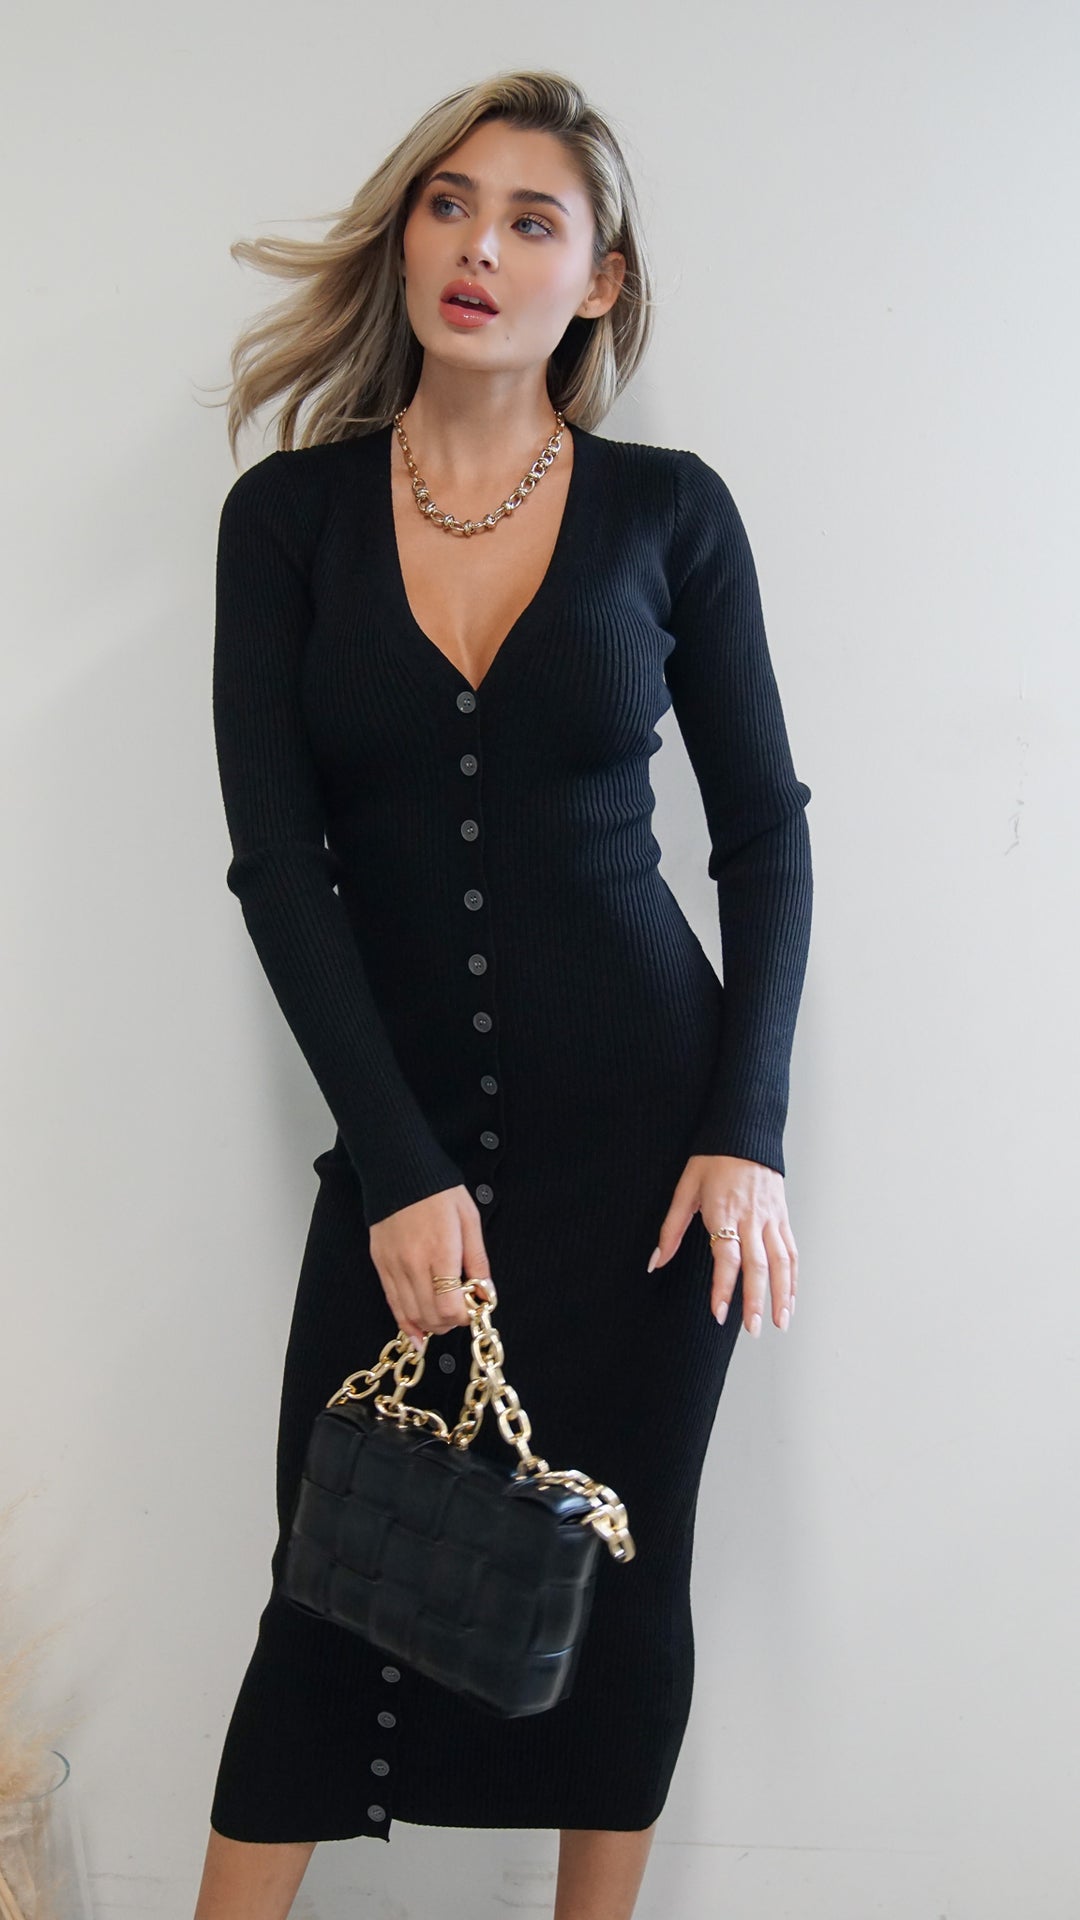 Milan Knit Midi Dress in Black - Steps New York